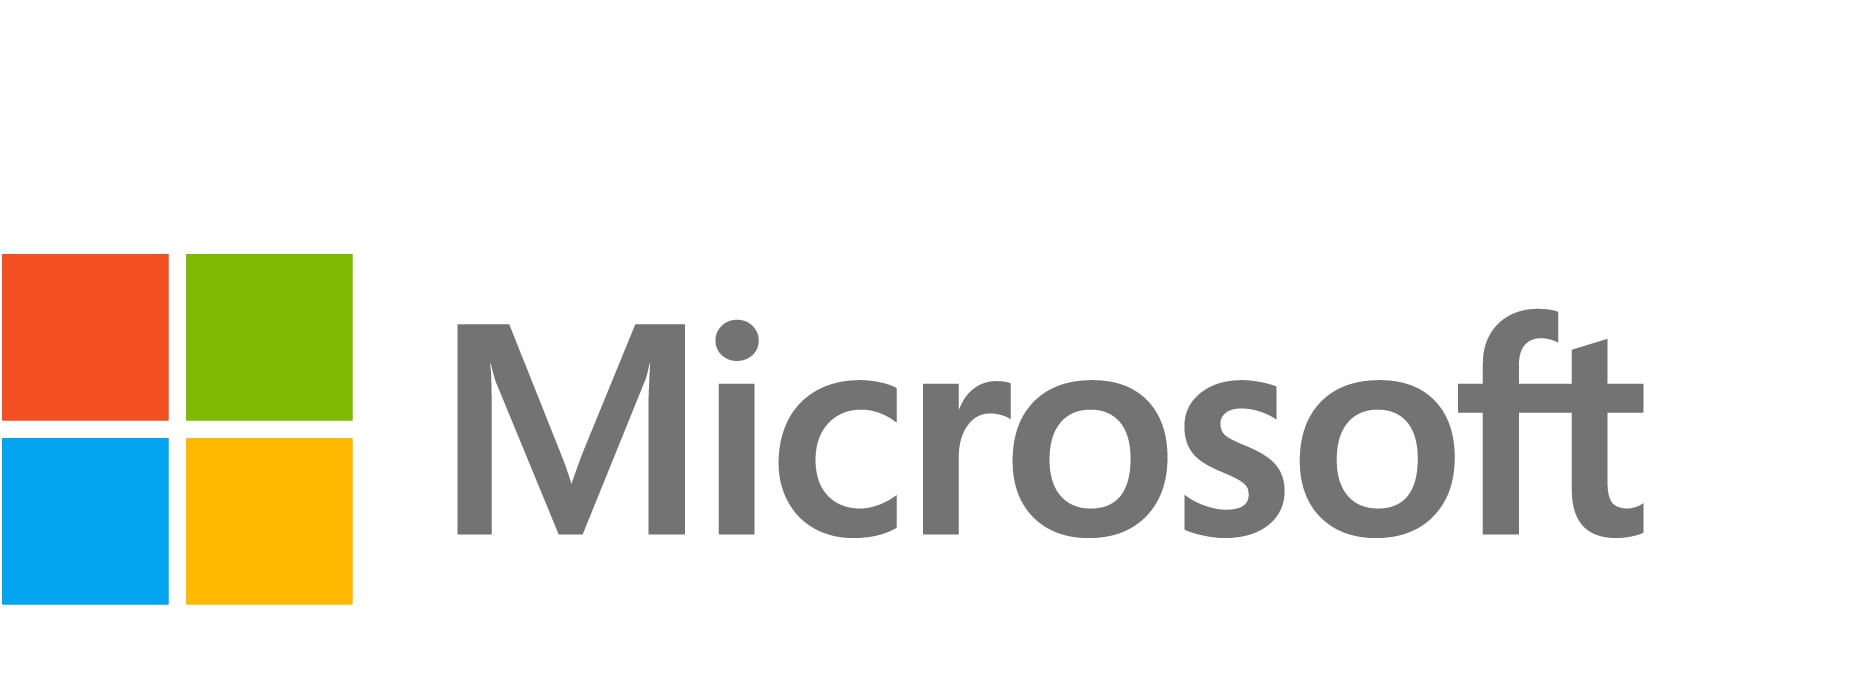 Microsoft Windows Server - software assurance - 1 device CAL